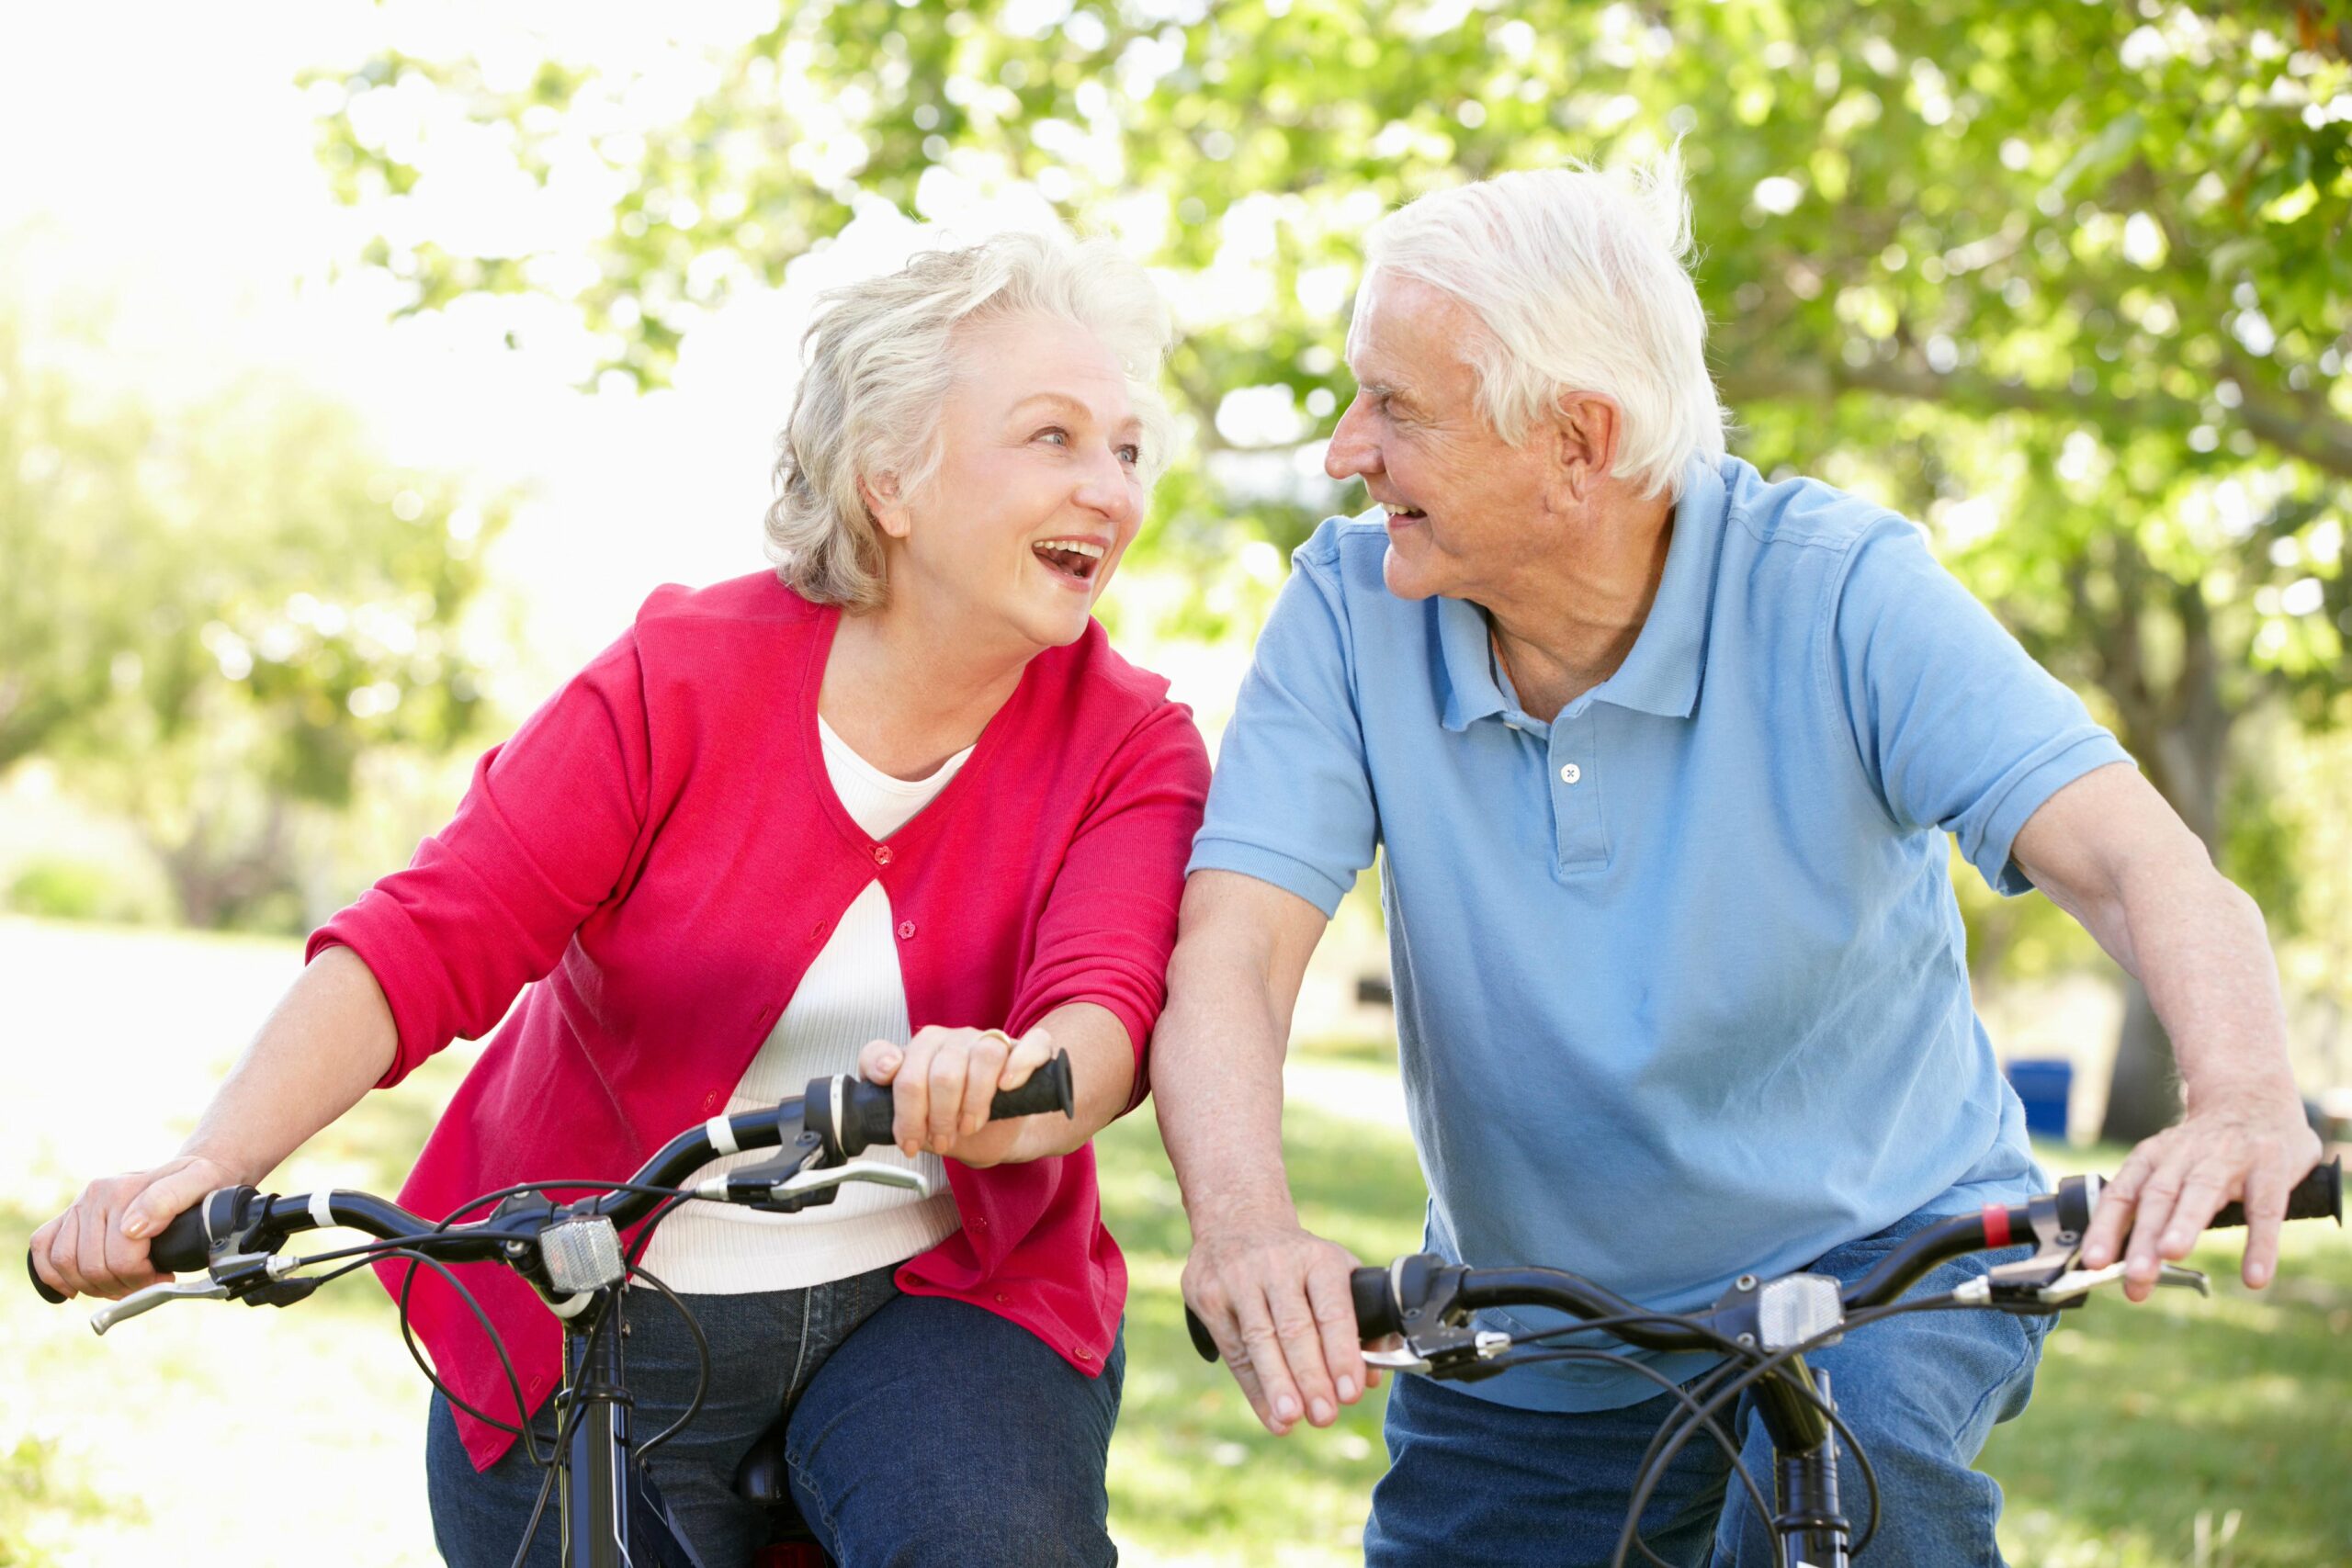 6 Benefits Of CBD For Seniors